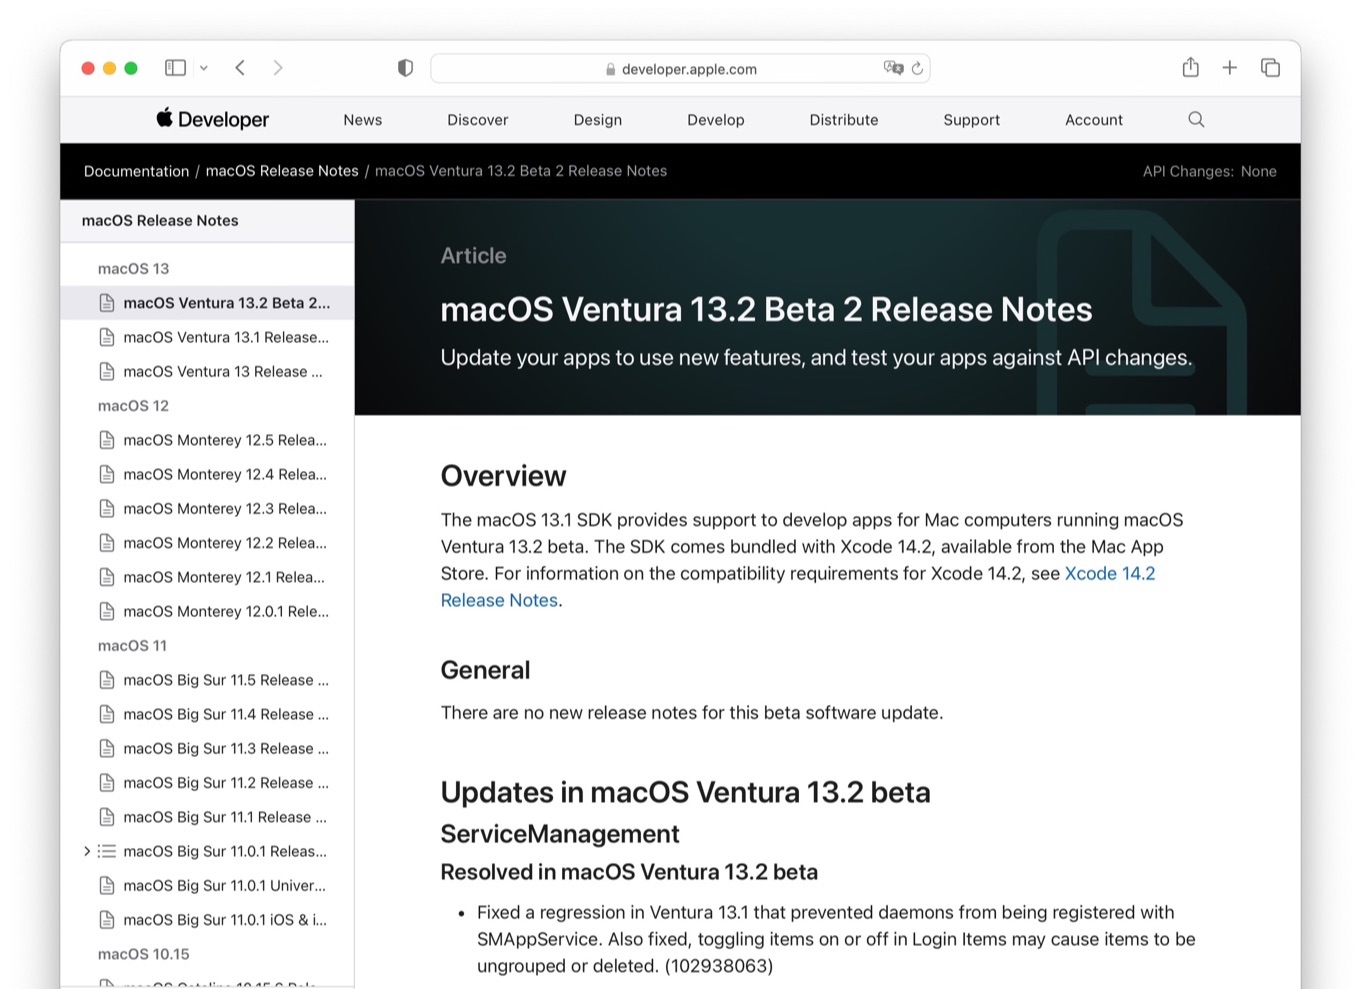 macOS Ventura 13.2 Beta 2 Release Notes